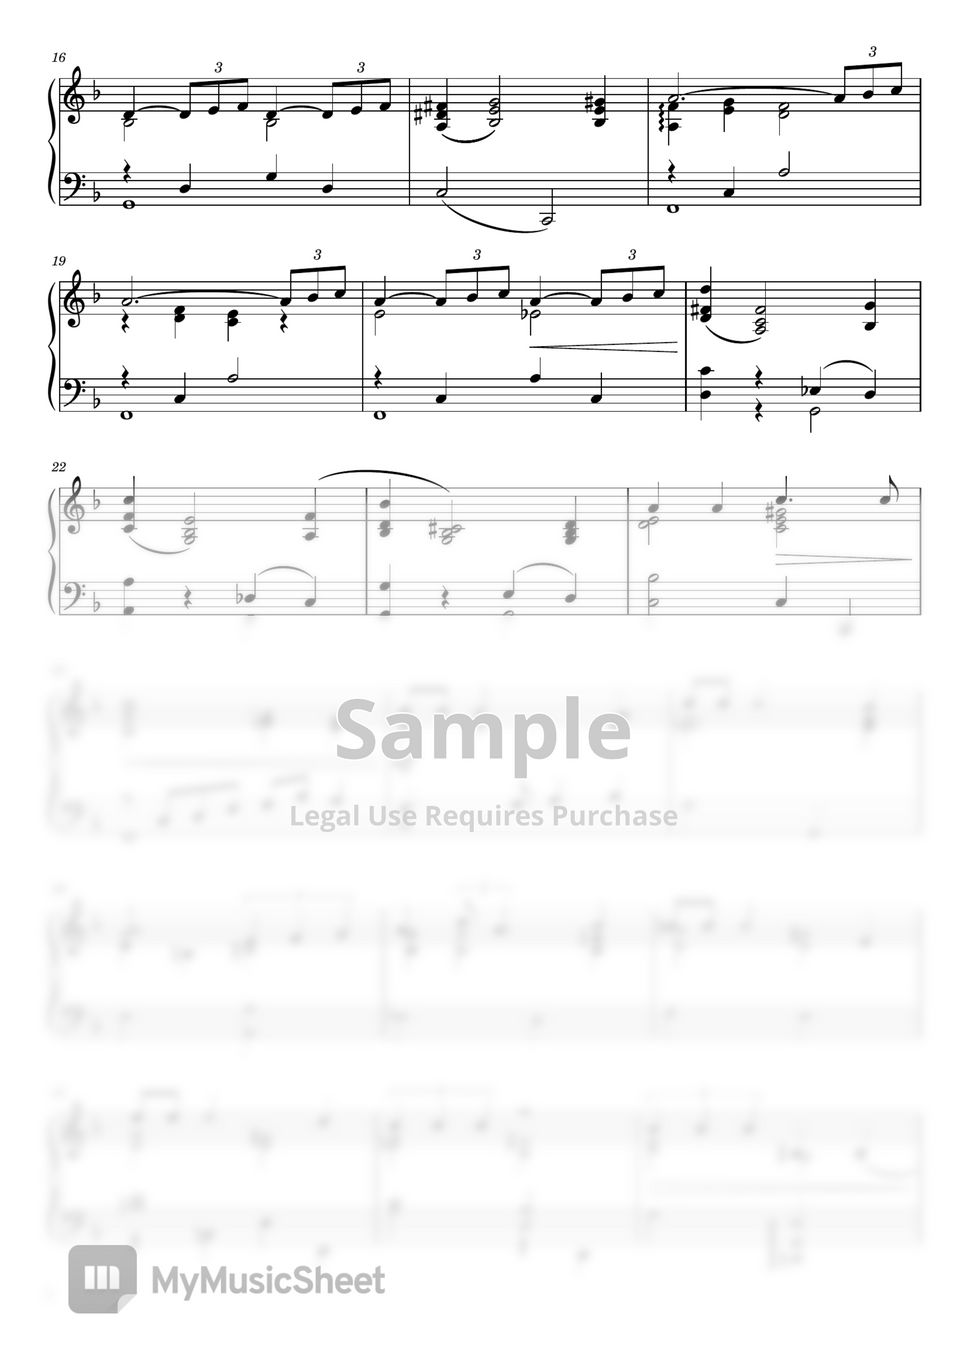 Mitchell Parish, Glenn Miller - Moonlight Serenade (Glenn Miller - For Piano Solo) by poon